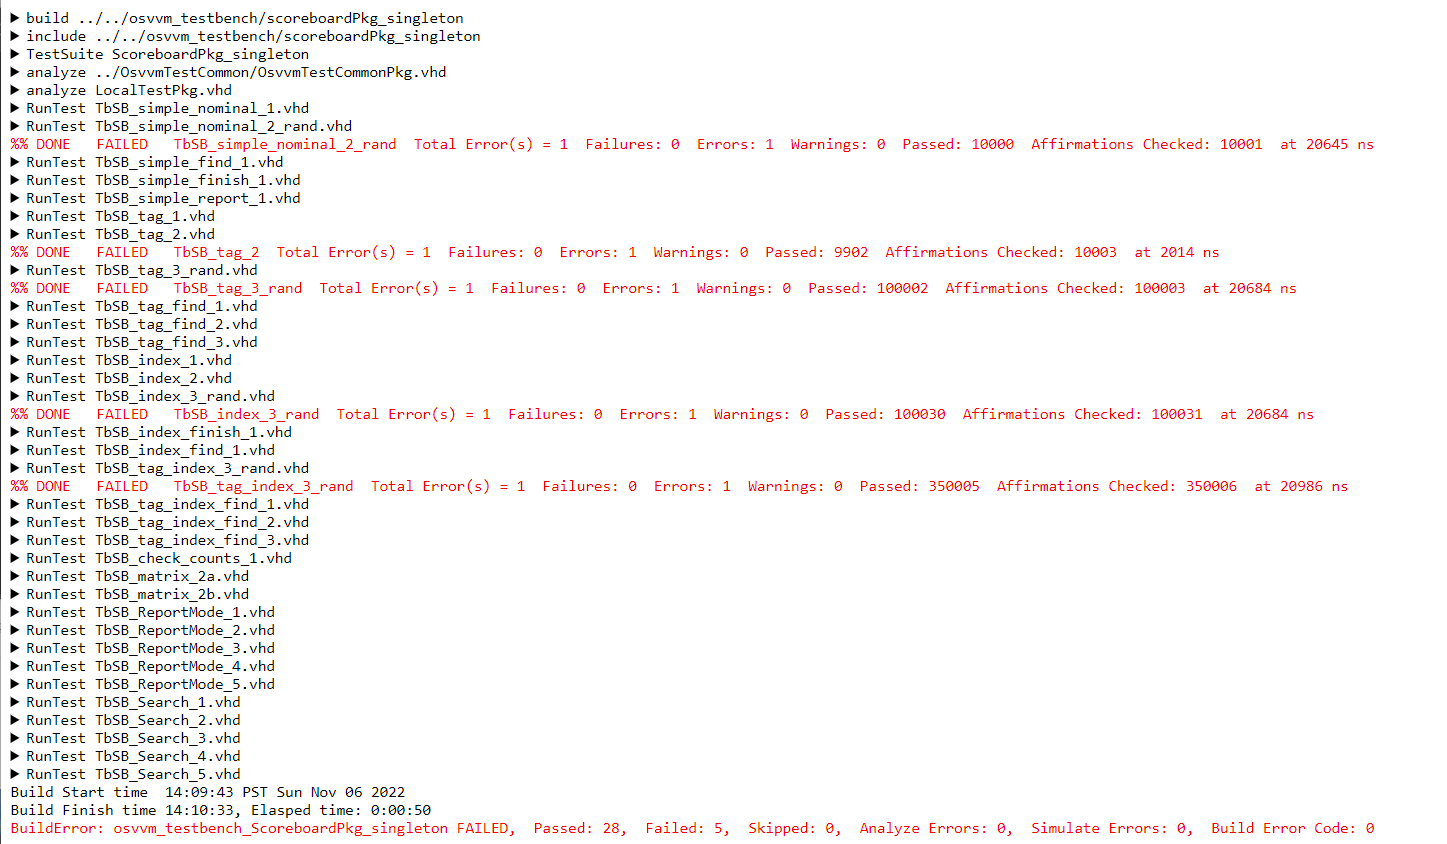 Simulation html log file